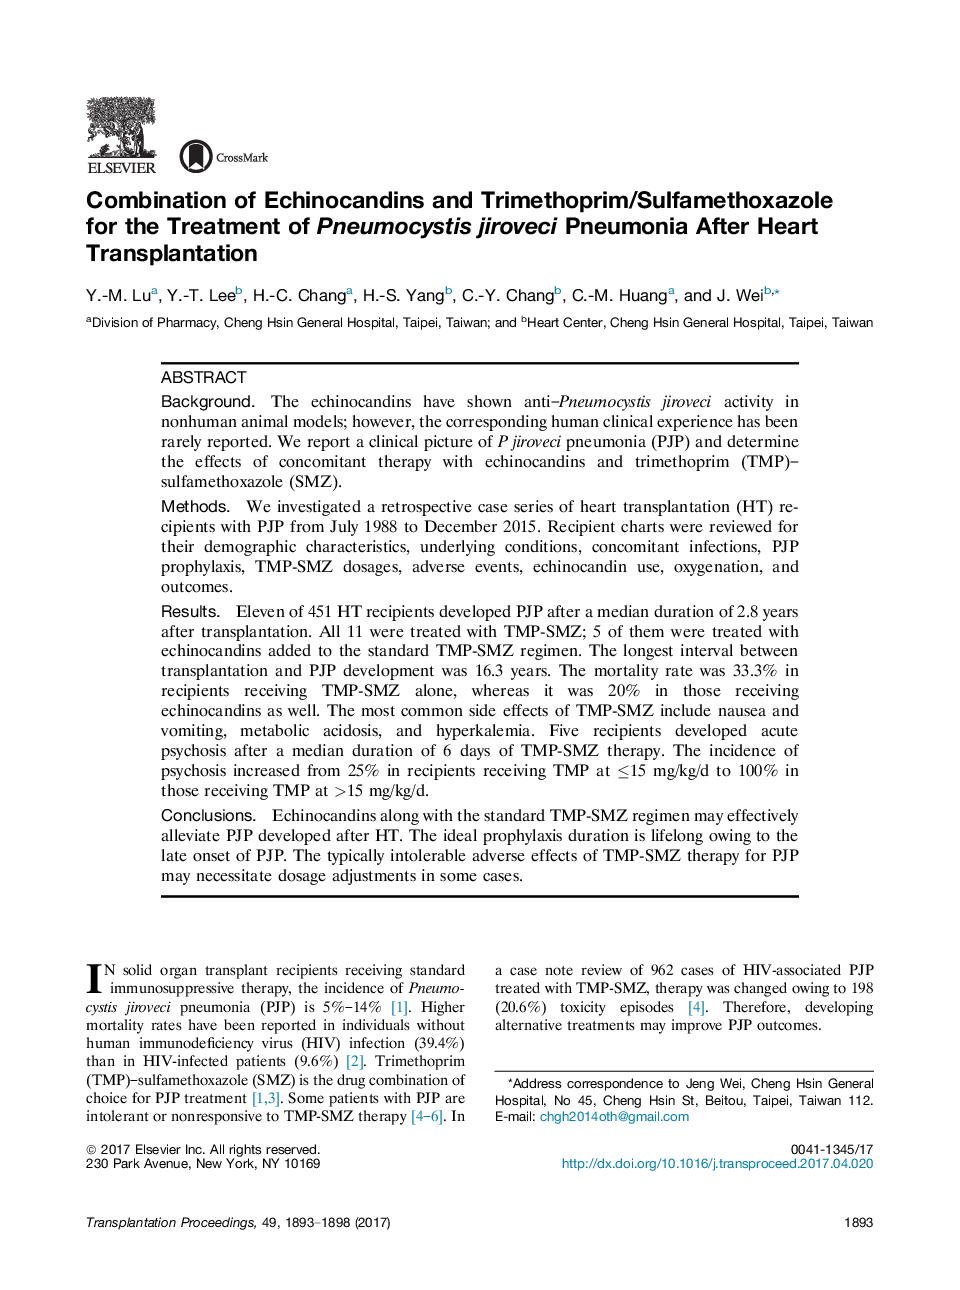 New Approaches in TransplantationThoracic transplantationCombination of Echinocandins and Trimethoprim/Sulfamethoxazole for the Treatment of Pneumocystis jiroveci Pneumonia After Heart Transplantation